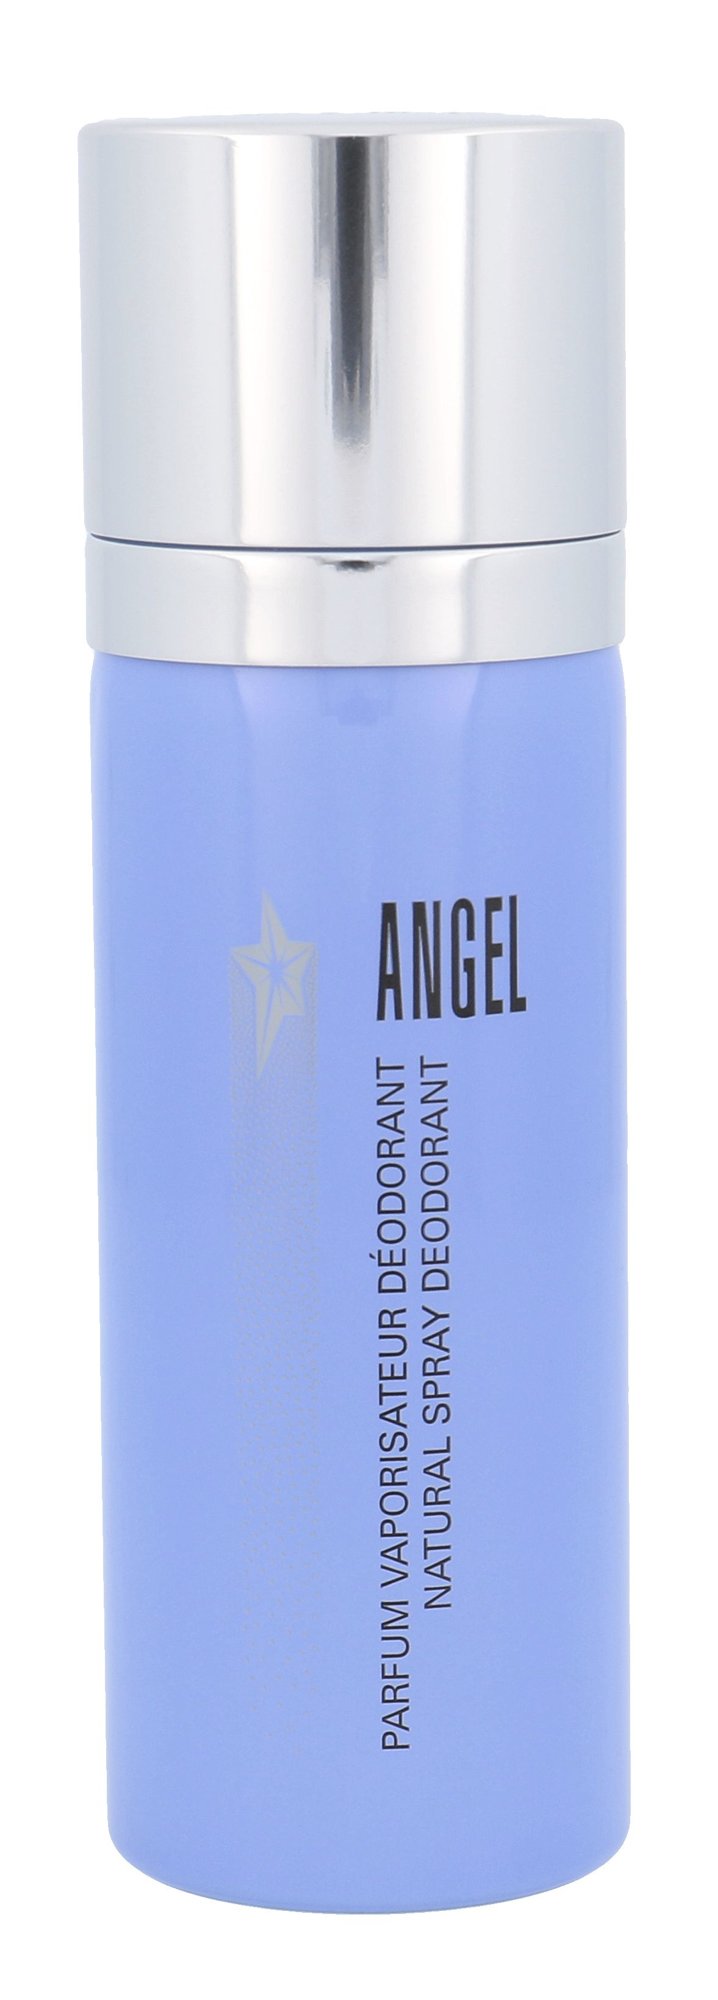 Thierry Mugler Angel dezodorantas